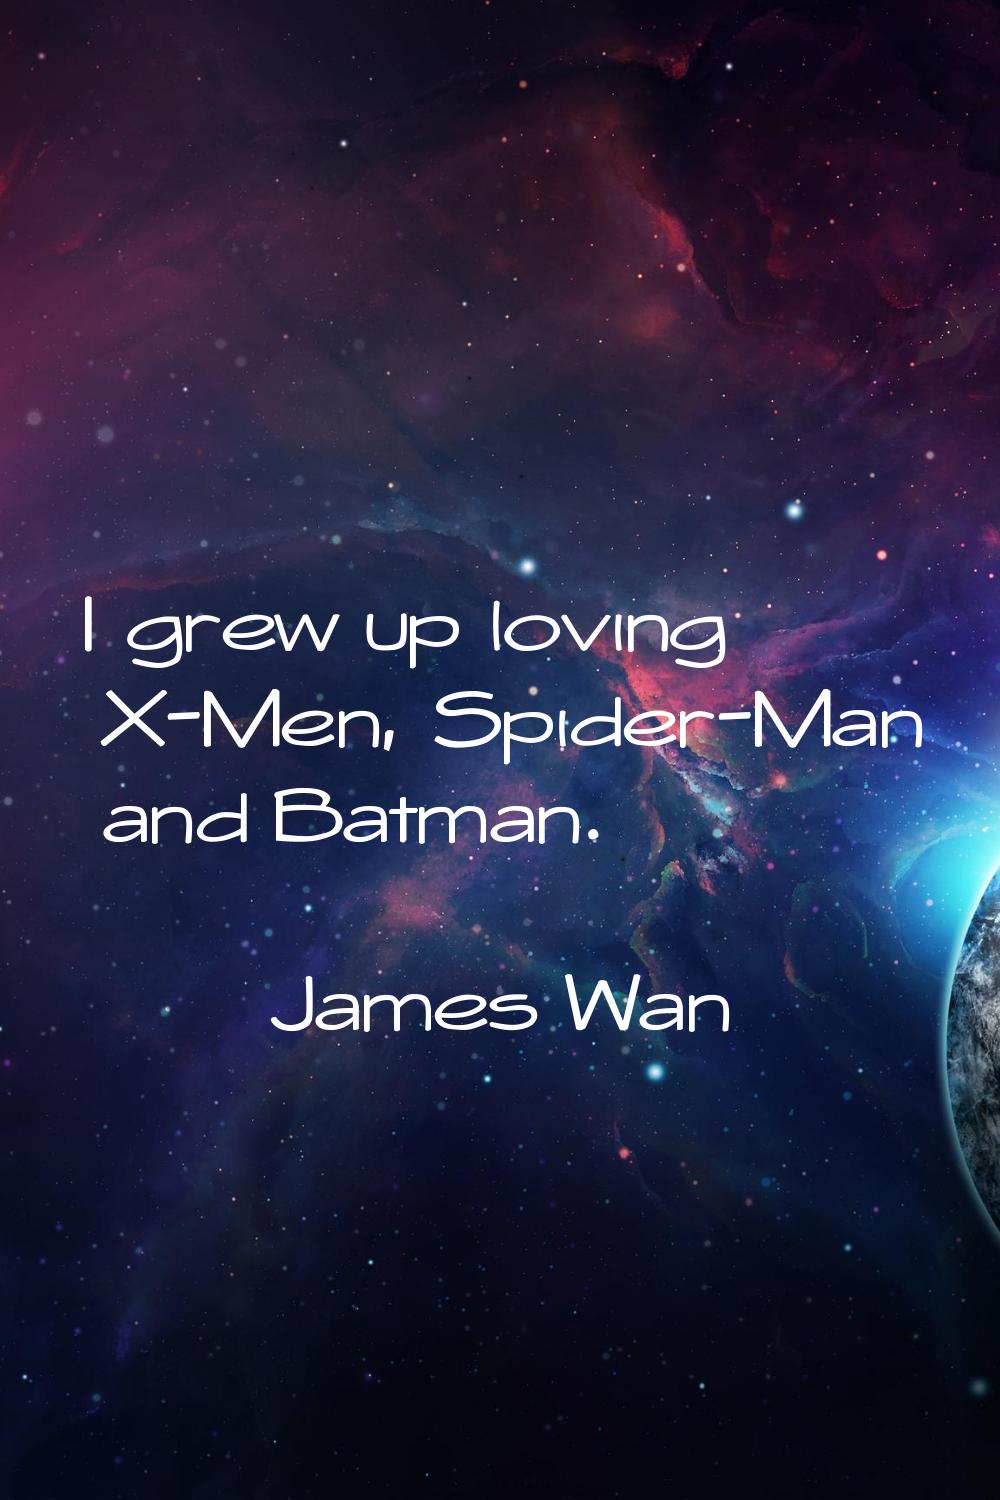 I grew up loving X-Men, Spider-Man and Batman.